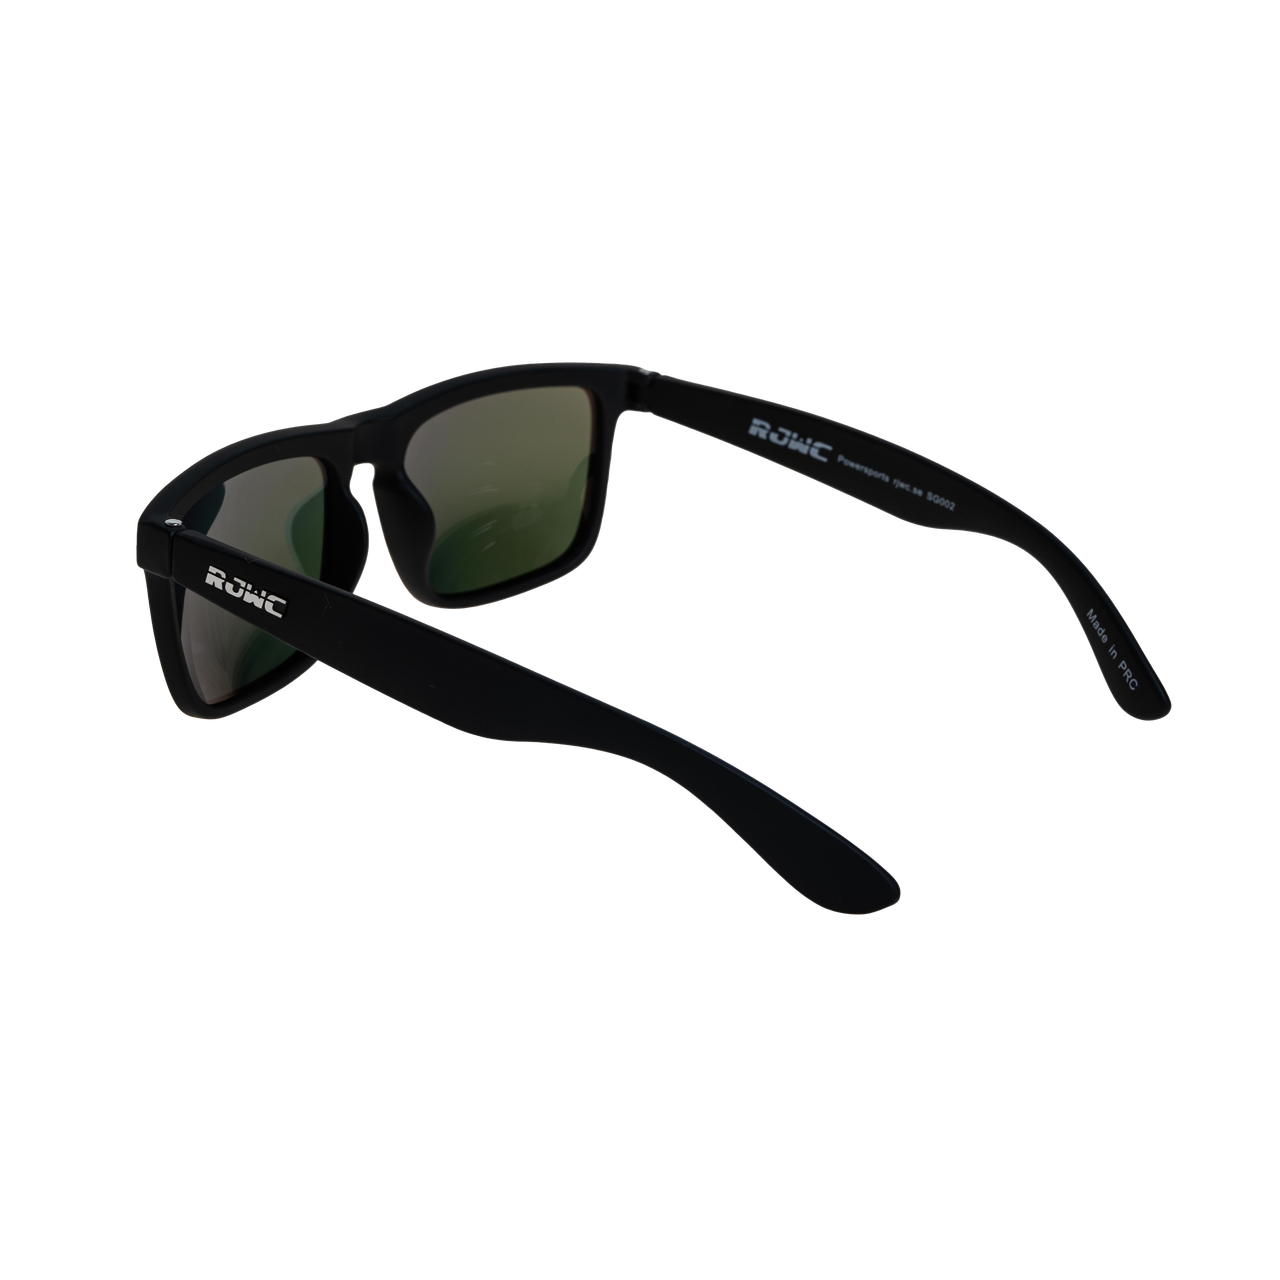 RJWC Wear Sunglasses Black Mud